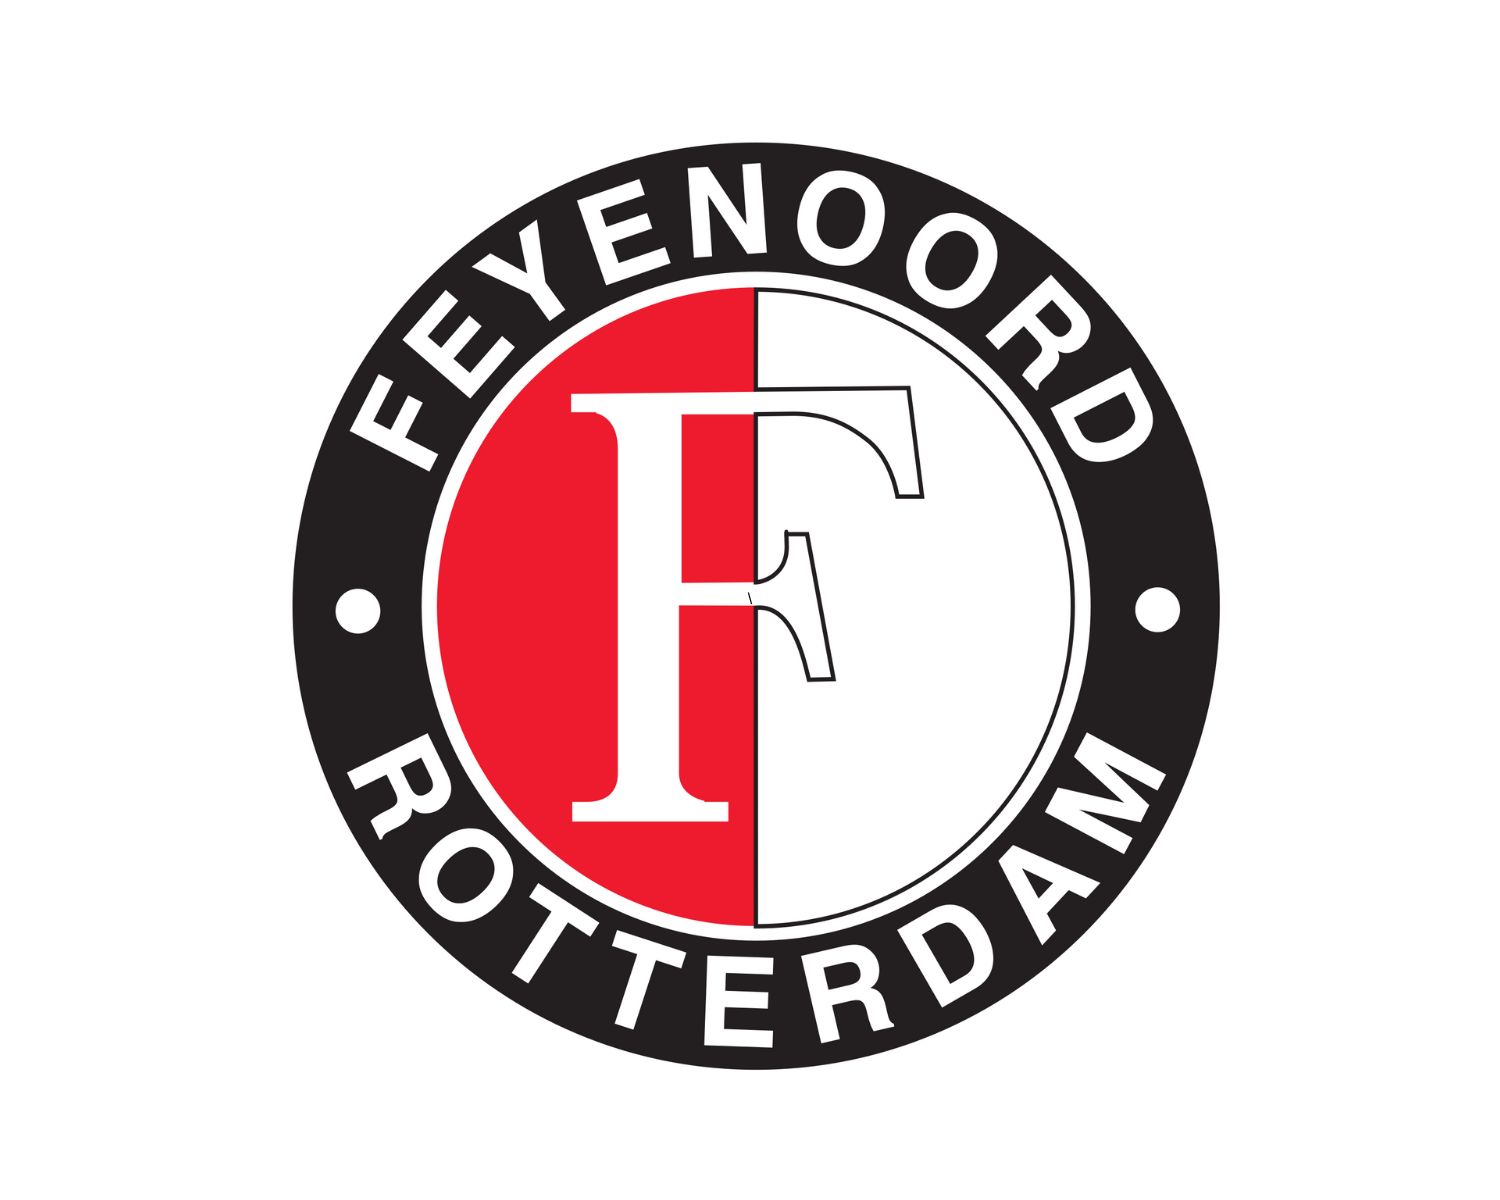 Feyenoord Rotterdam: 14 Football Club Facts - Facts.net